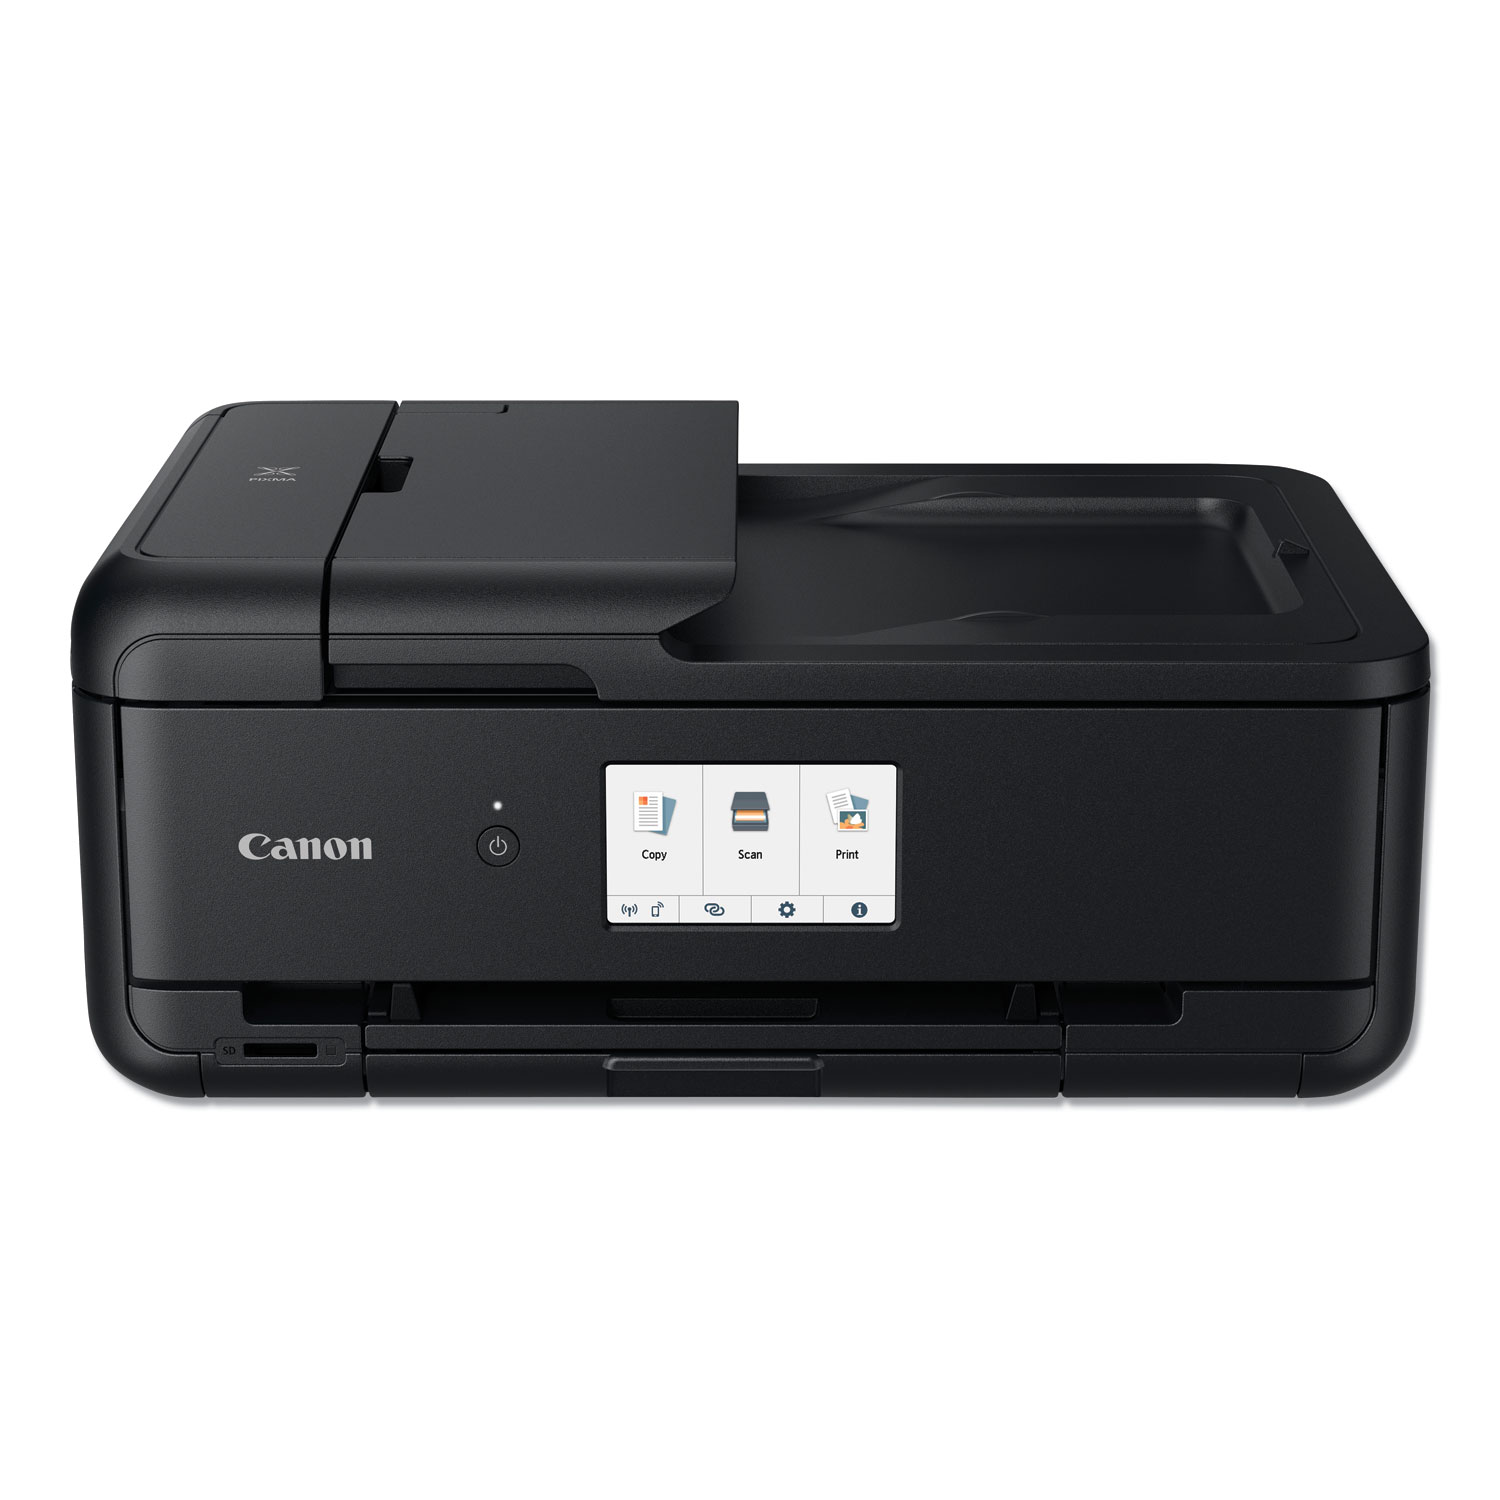  Canon 2988C002 PIXMA TS9520 Wireless Inkjet All-In-One Printer, Copy/Print/Scan (CNM2988C002) 